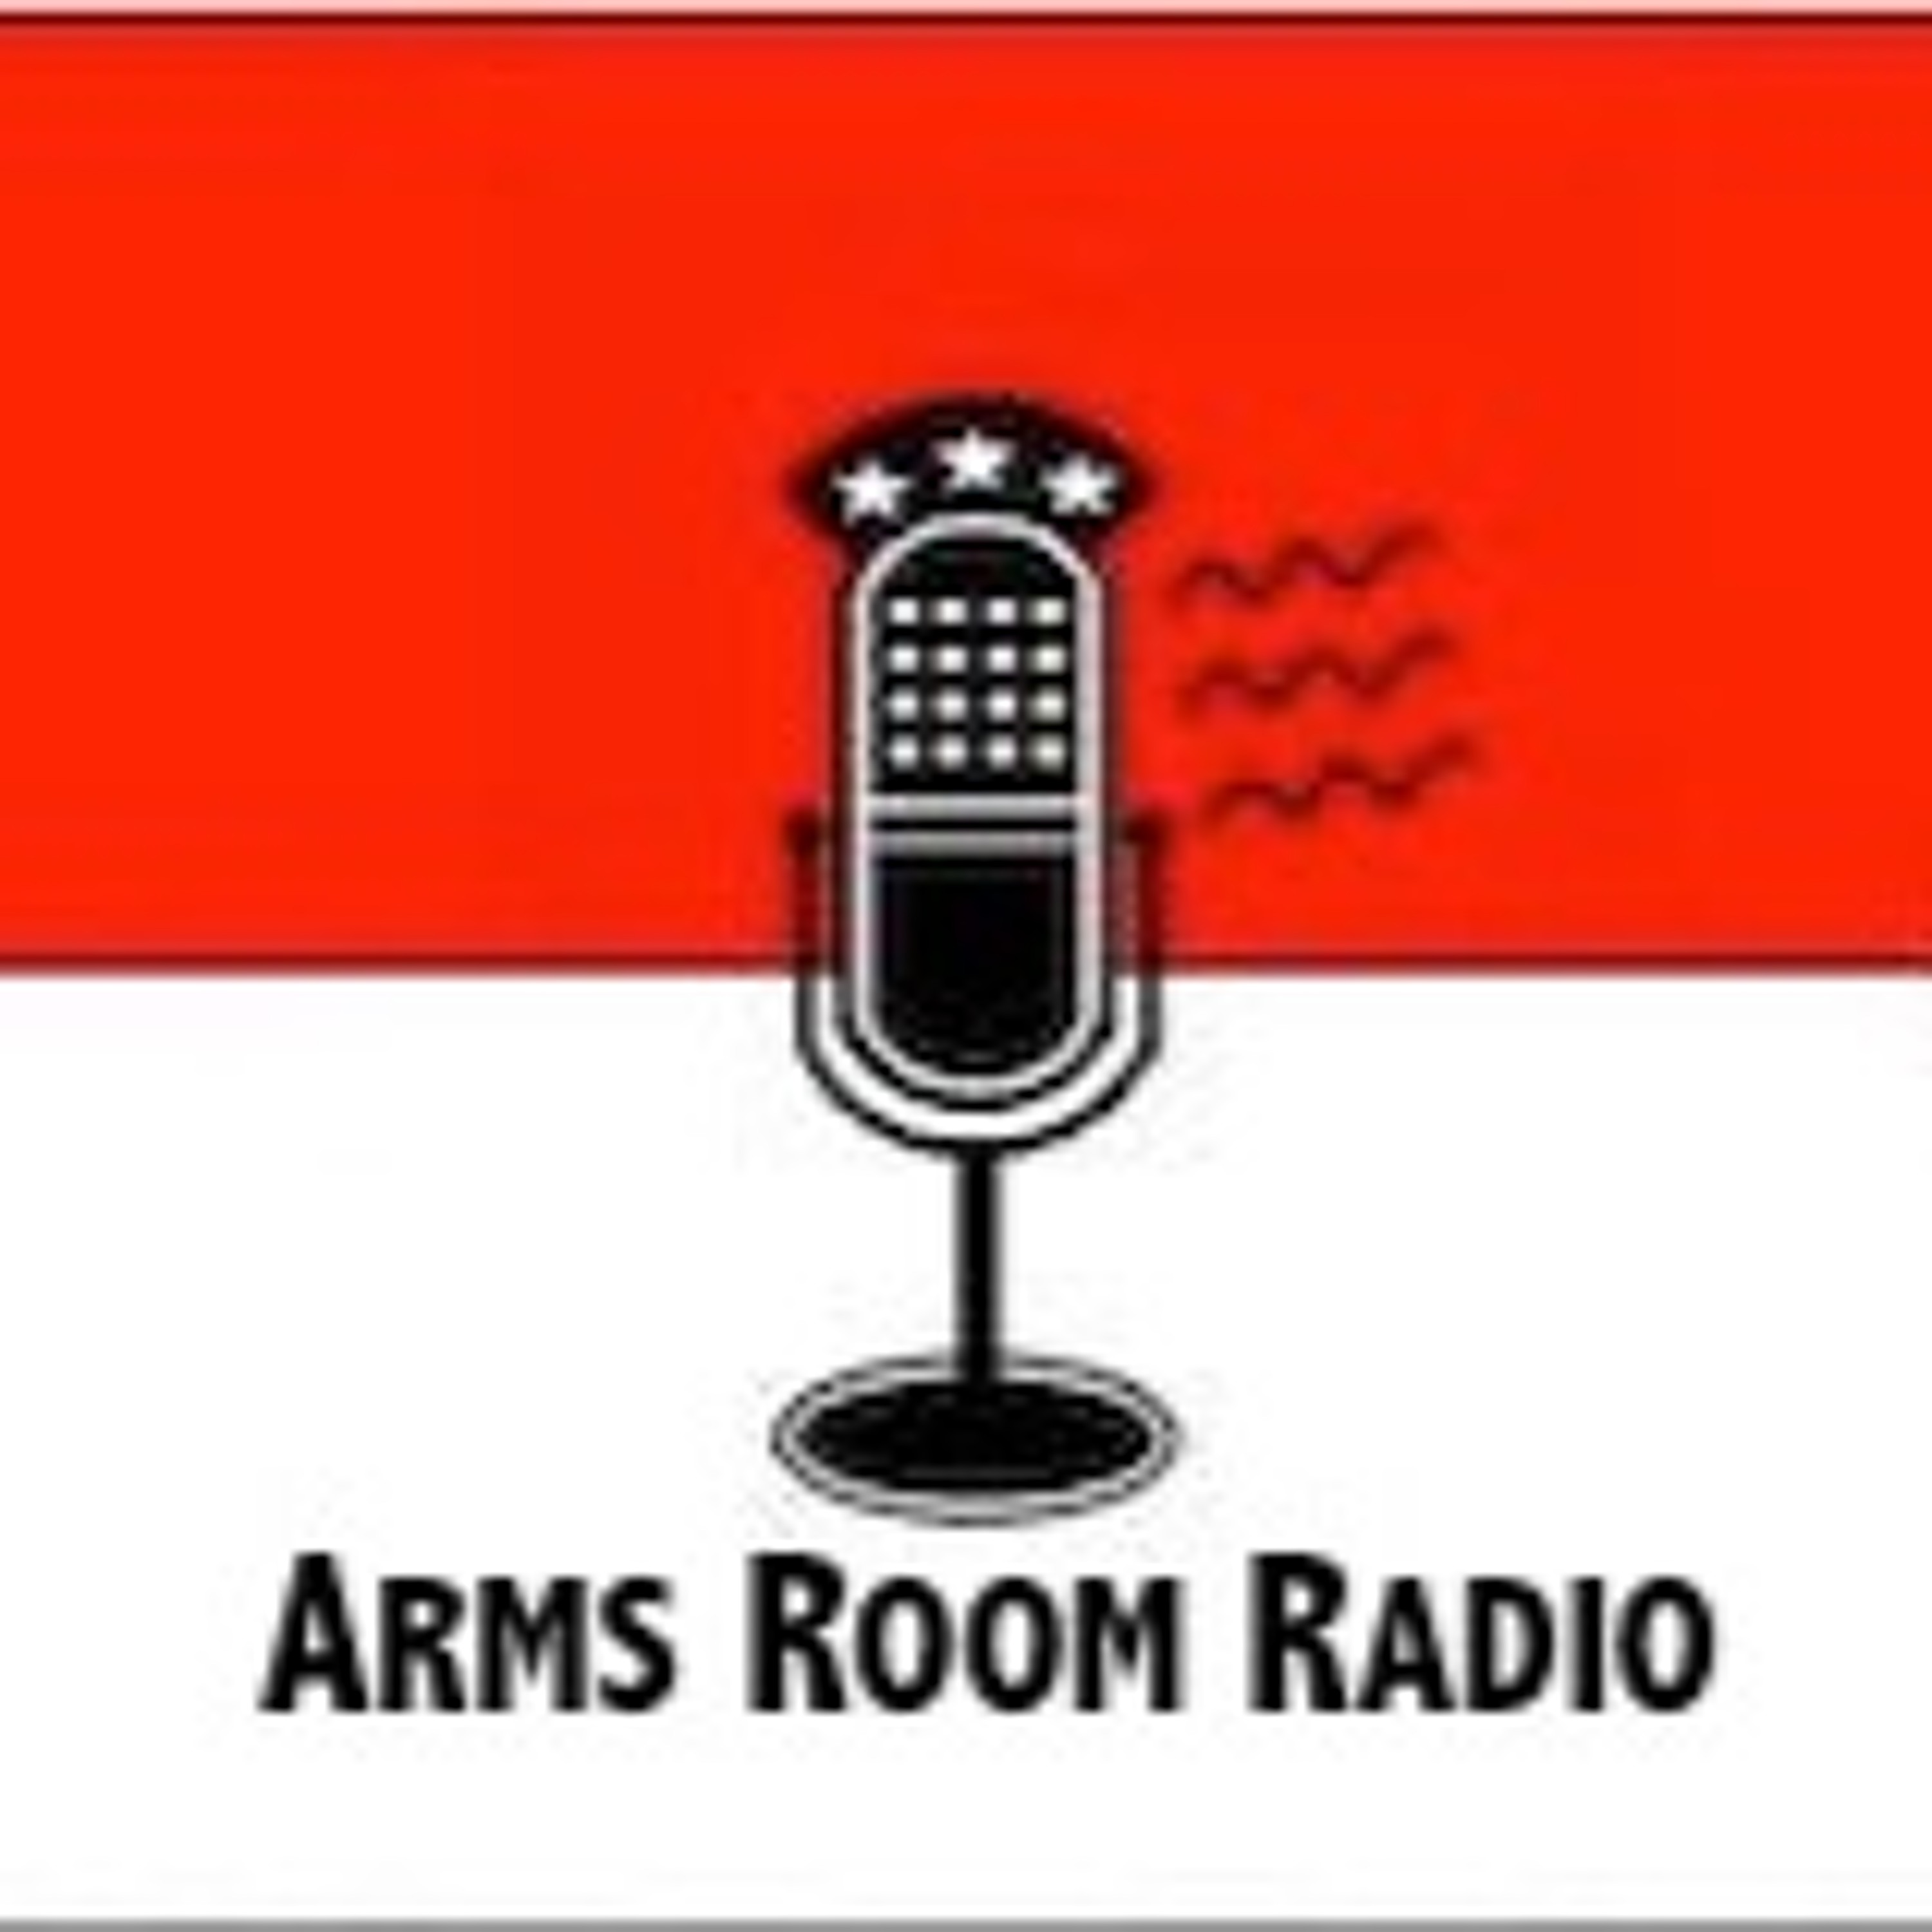 ArmsRoomRadio 03.02.19 Crab leg fight and a rabid fox